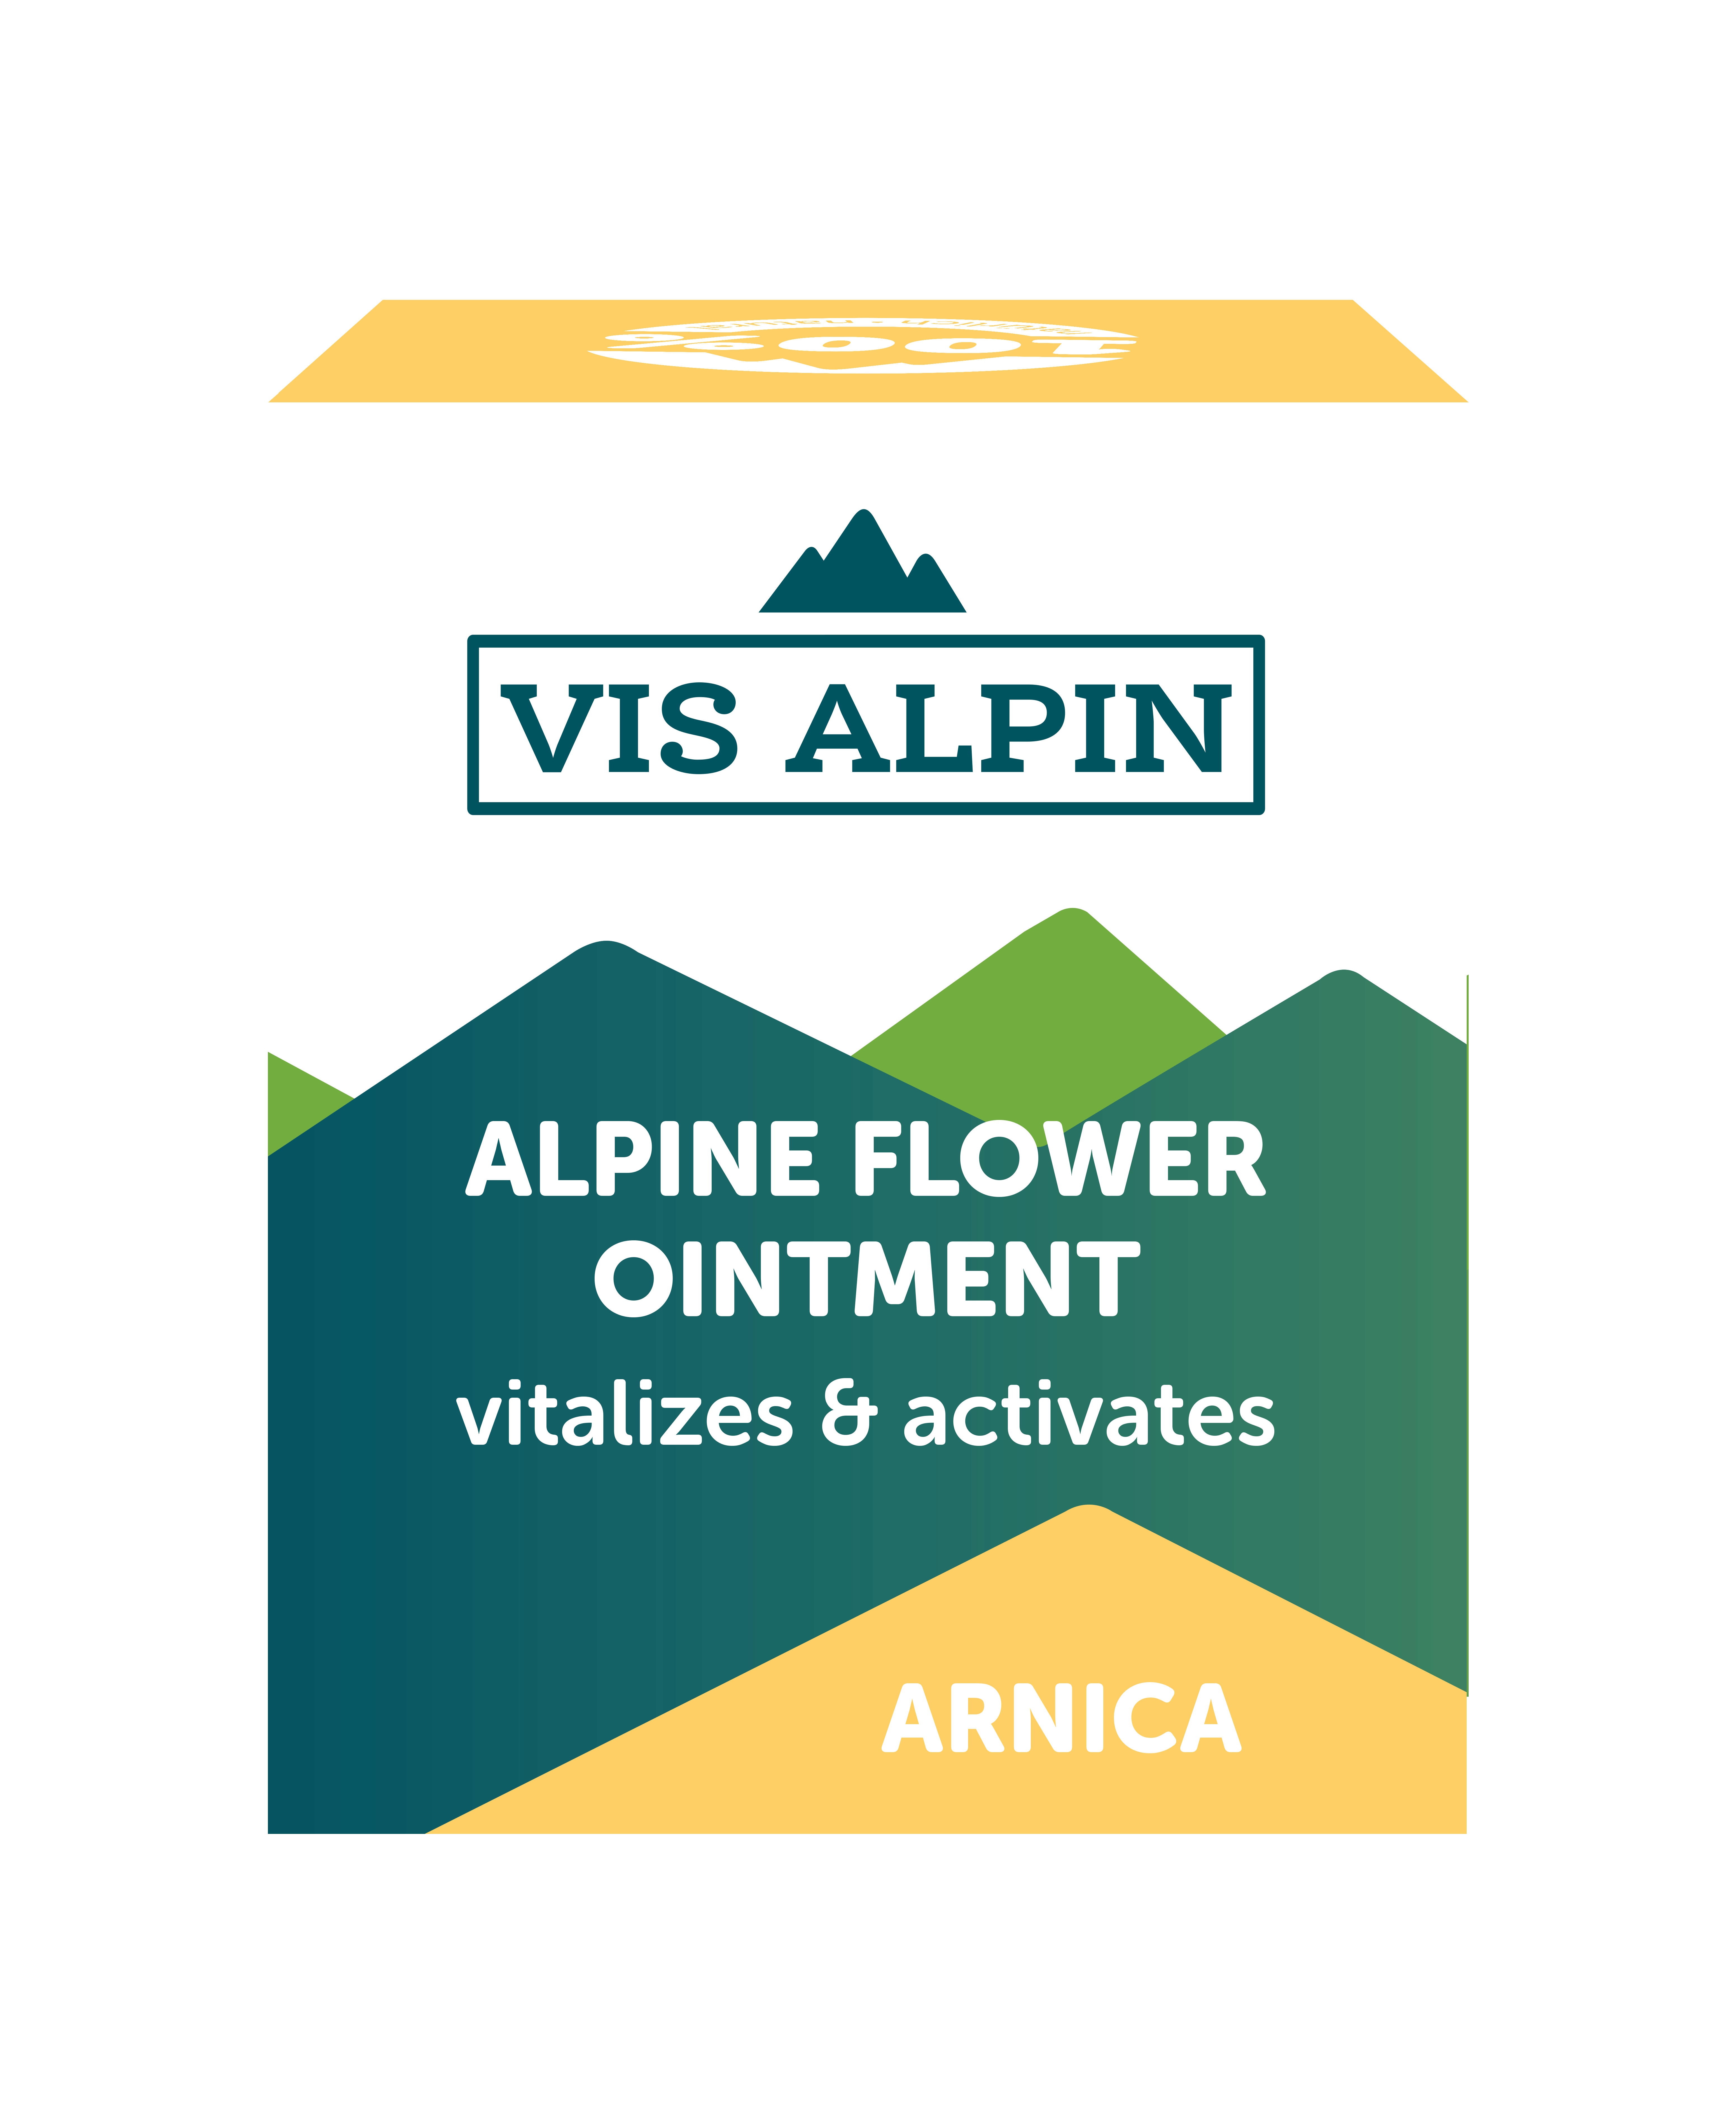 VIS ALPIN ALPINE FLOWER OINTMENT ARNICA